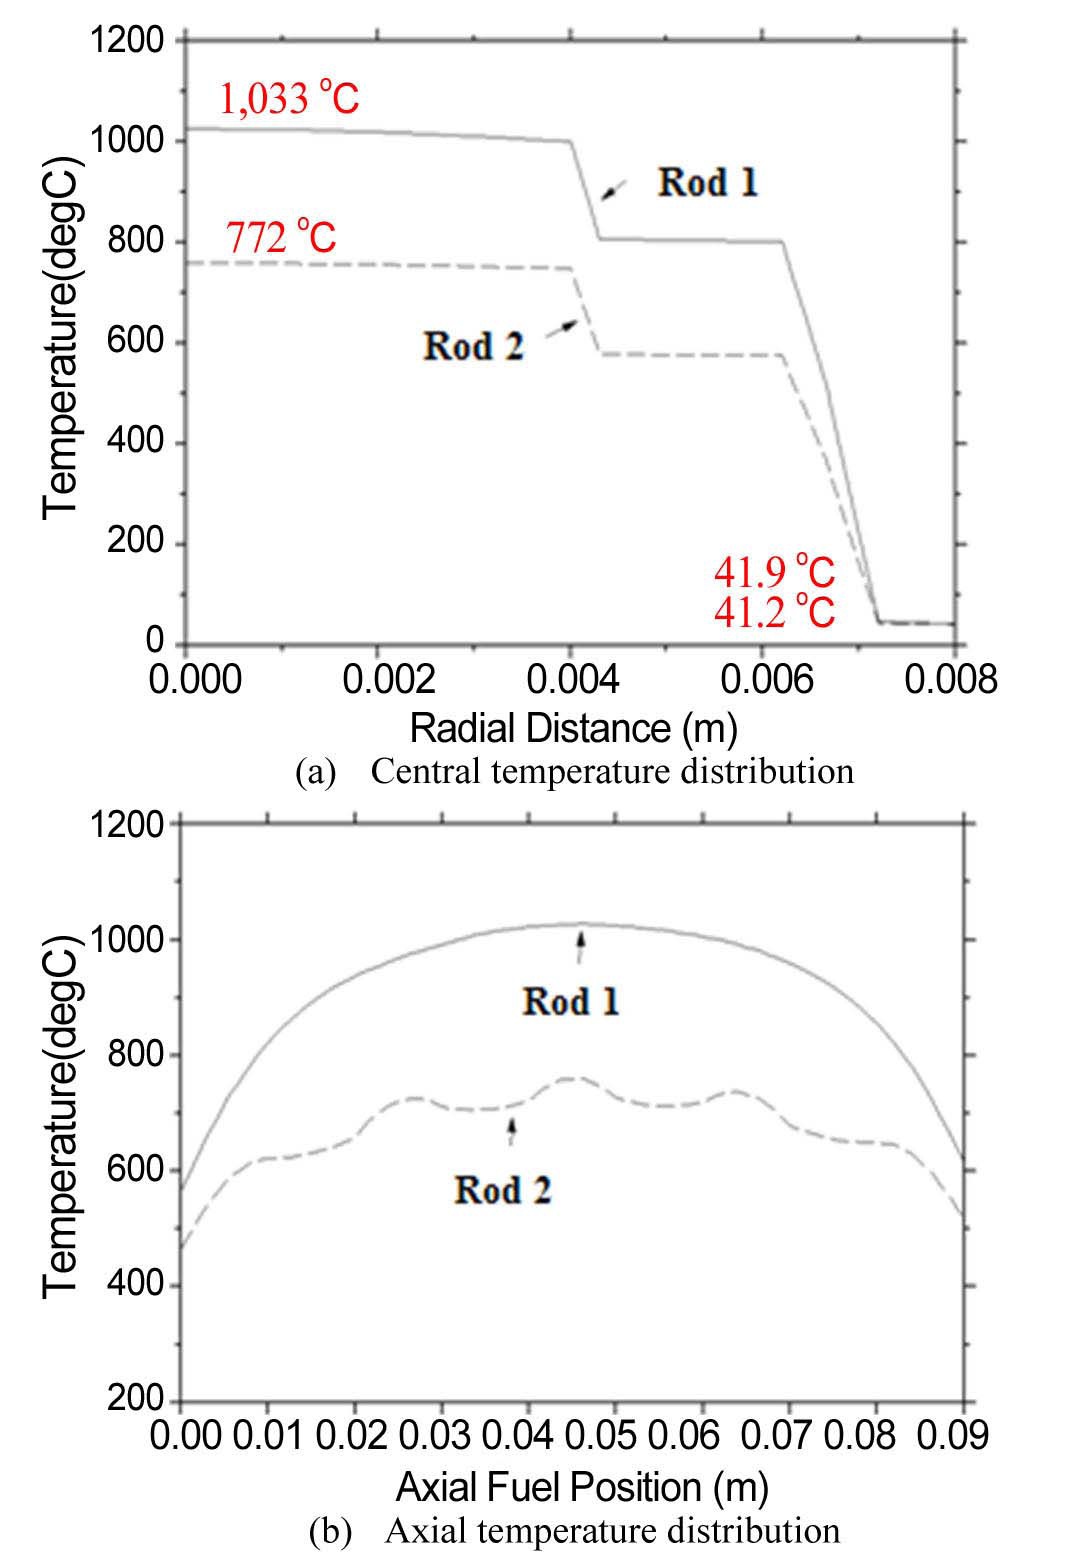 Calculated Temperature Distribution of Test Rods (Rod 1; 30% He + 70% Ne, Rod 2; 10% He + 90% Ne).